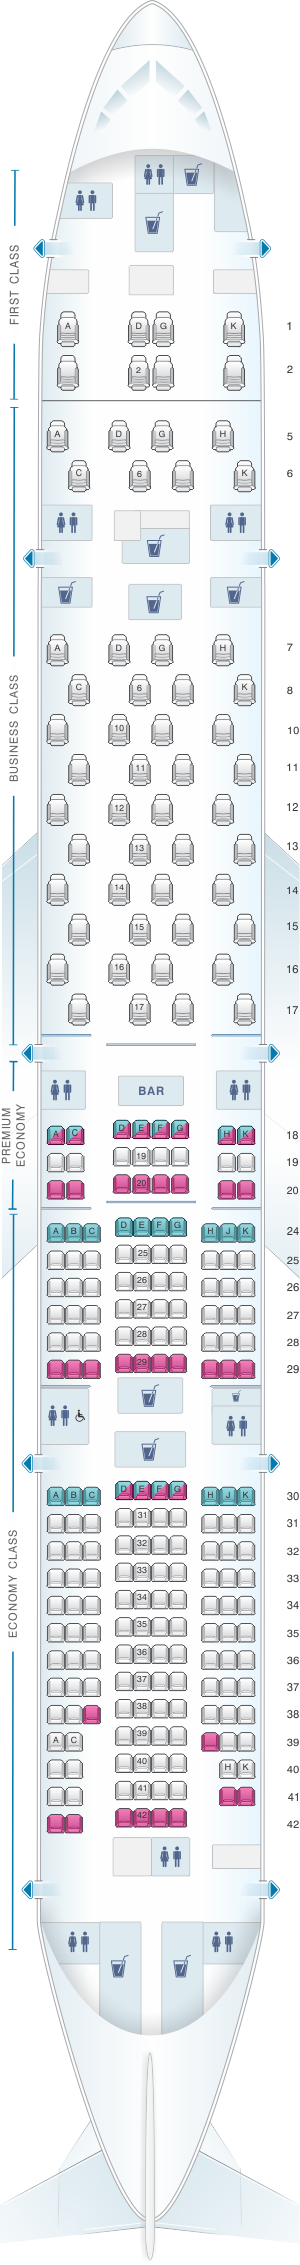 Seat Map ANA - All Nippon Airways Boeing B777 300ER 264pax | SeatMaestro